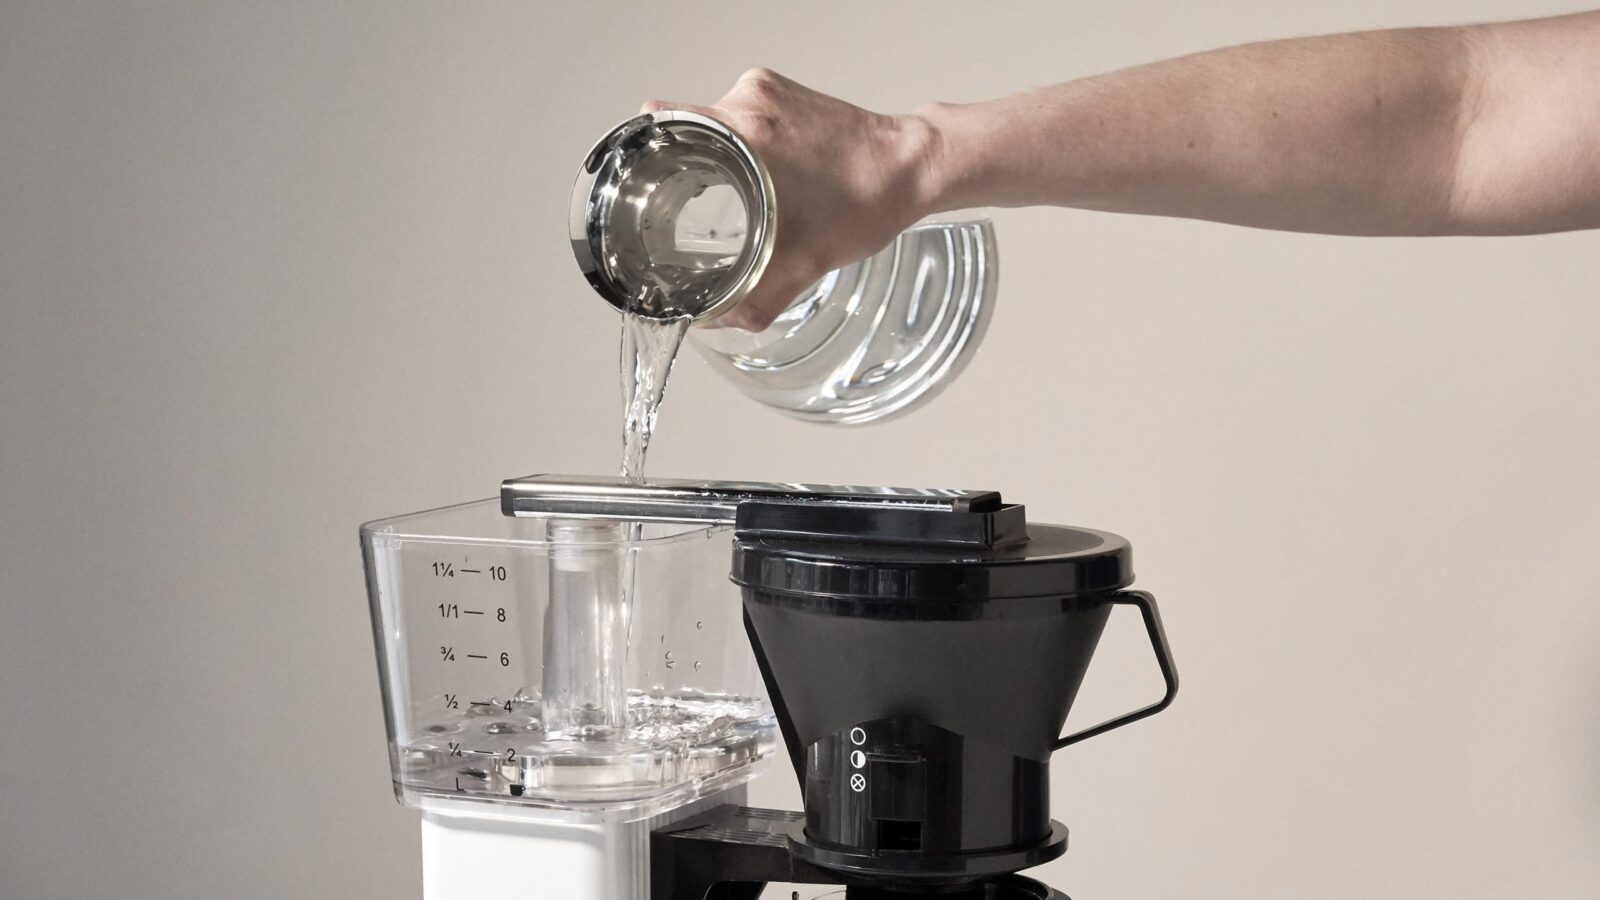 01 TRD20 Coffee Maker Water scaled - Brazil кофе для френч пресса 37,5 гр.